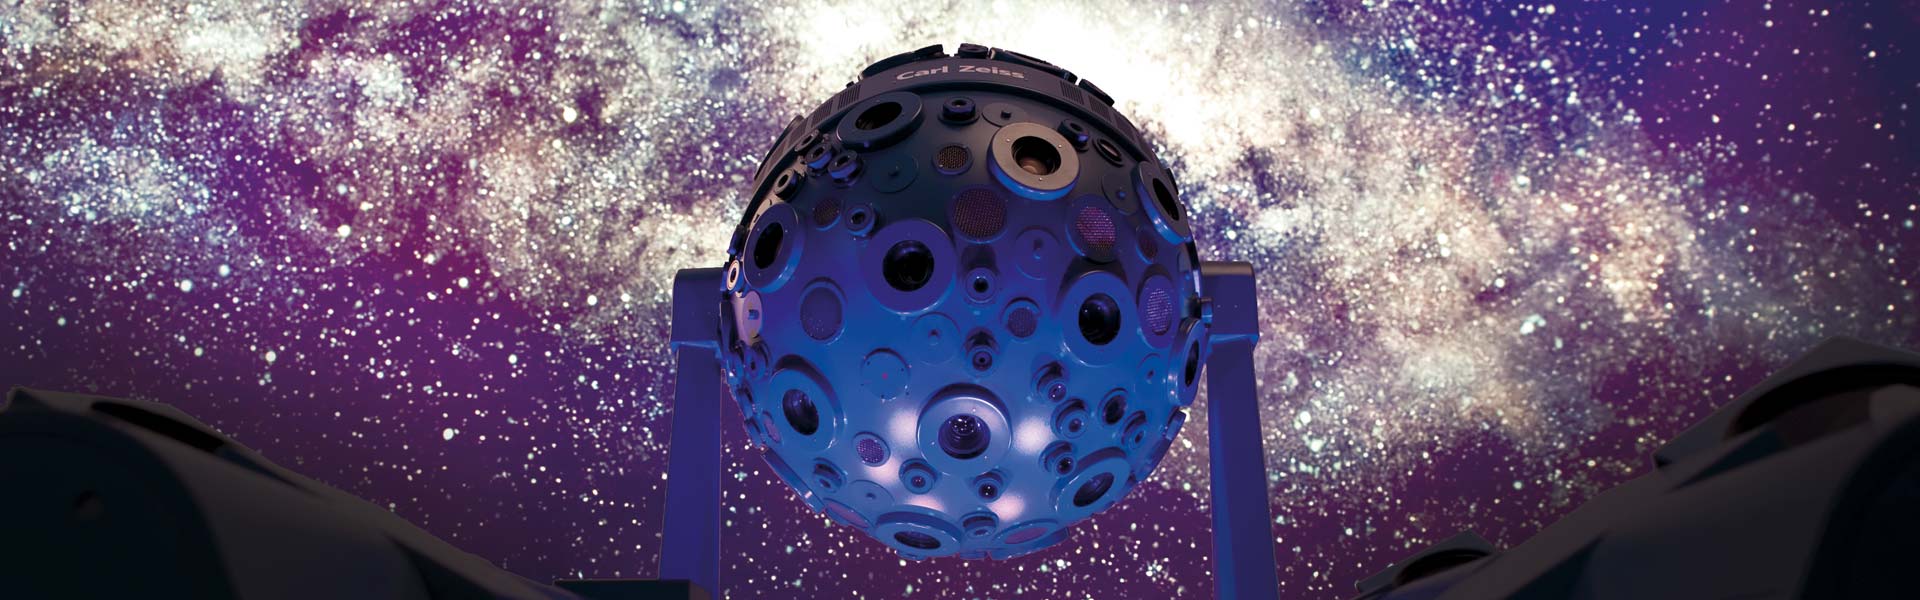 Tagesfahrt 2016 TF 1664 - Zeiss-Planetarium Jena